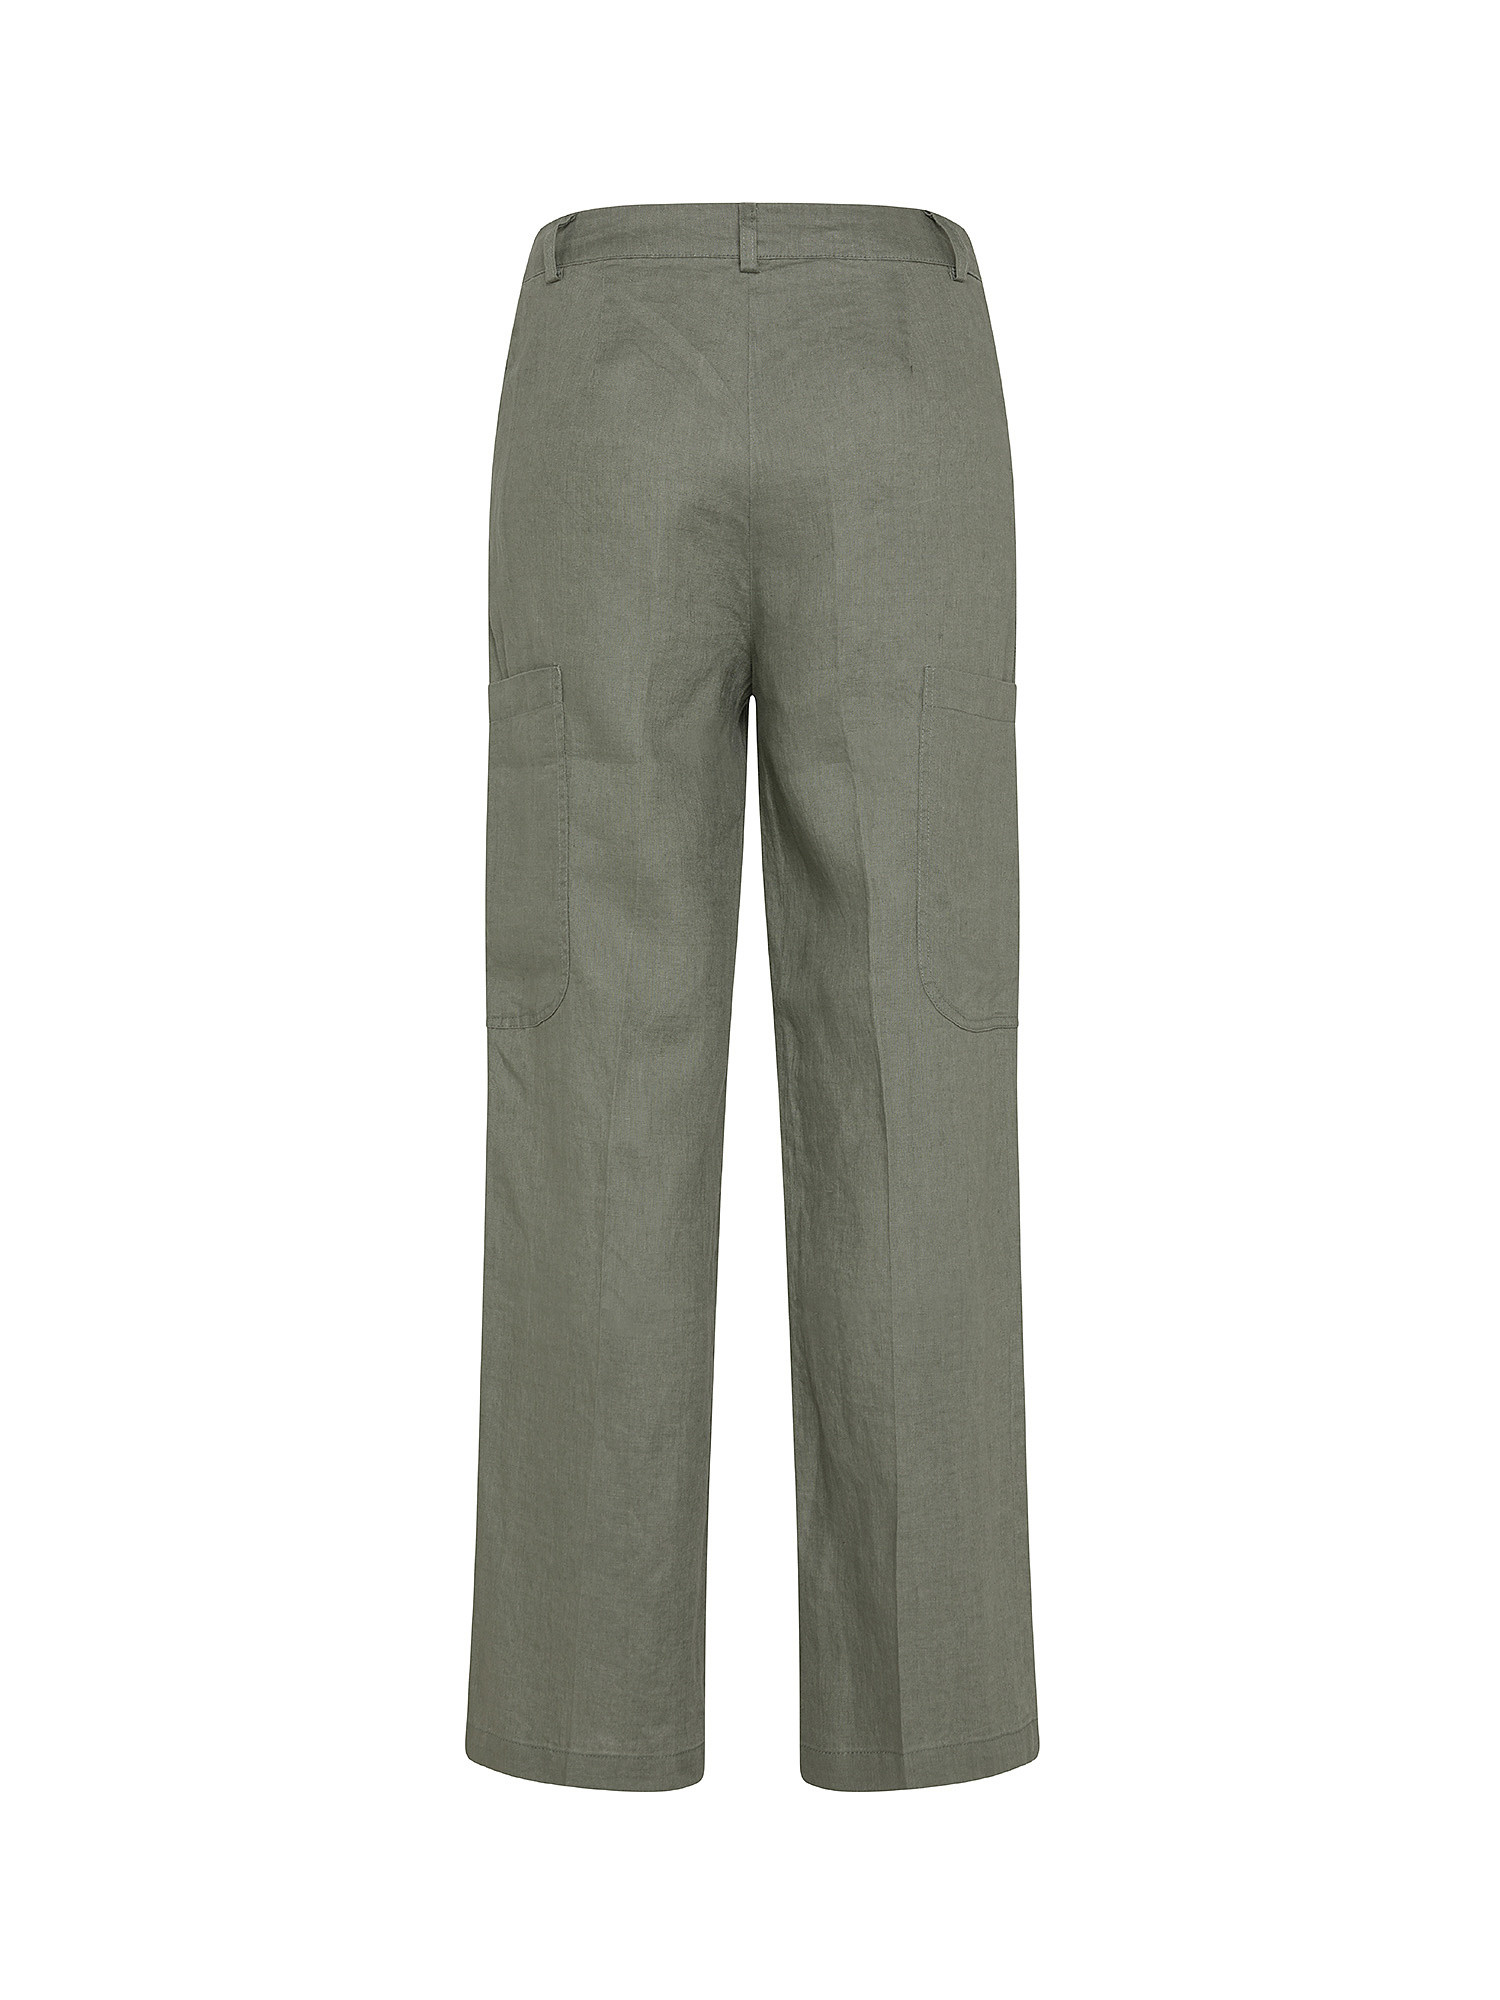 Koan - Linen cargo pants, Sage Green, large image number 1